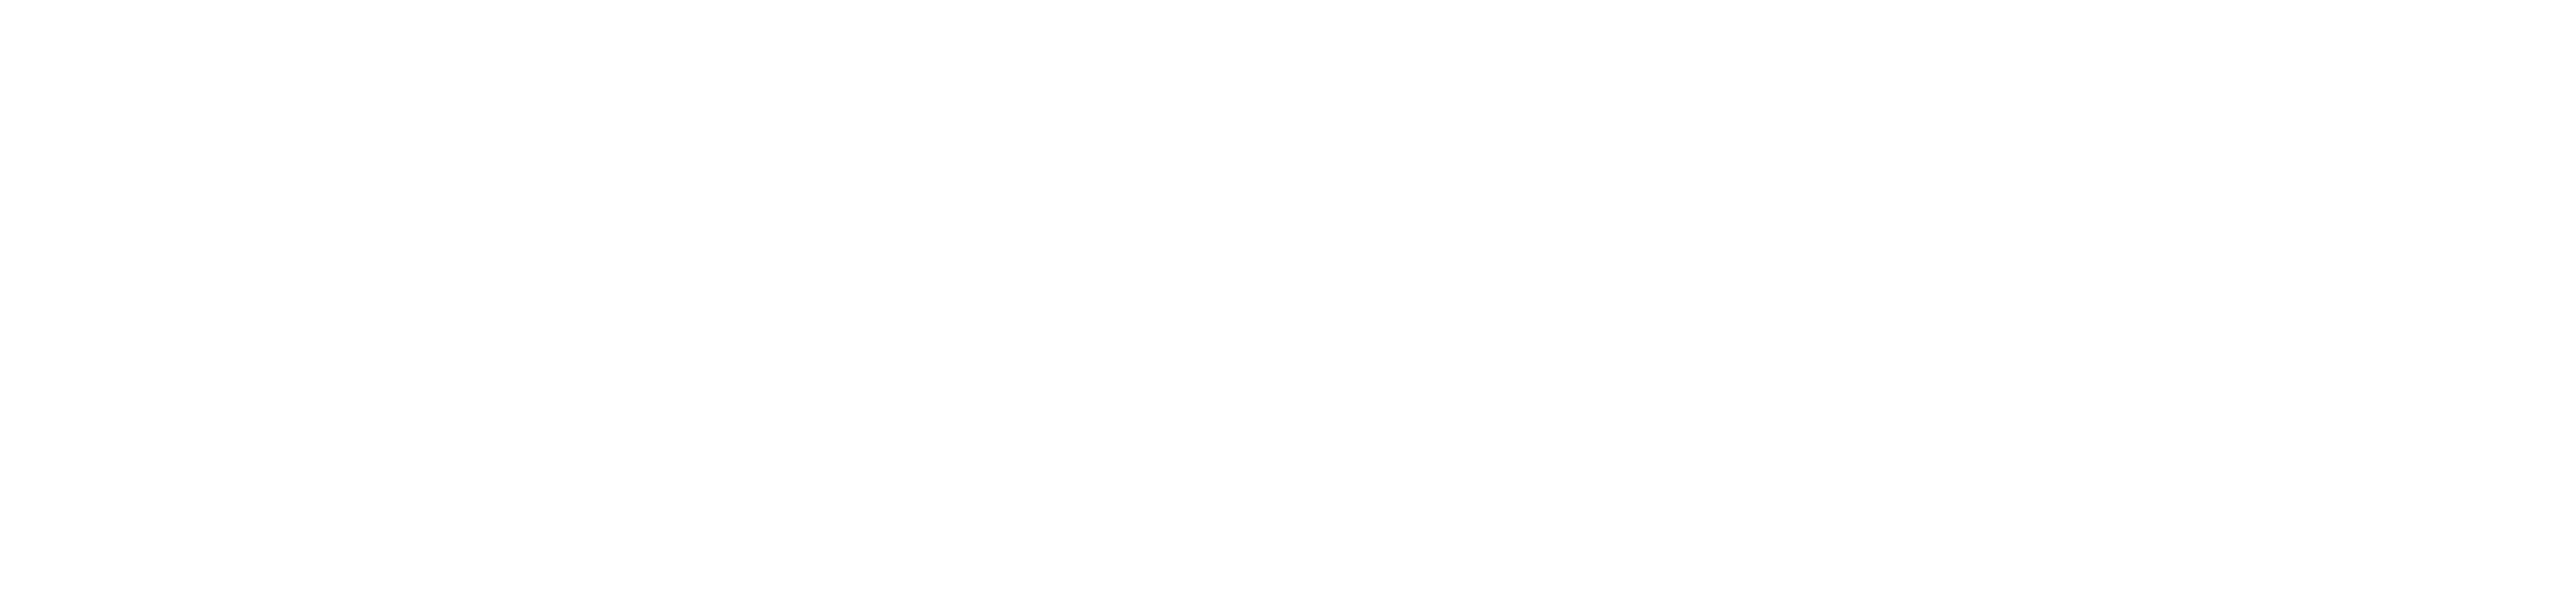 Prevost Properties